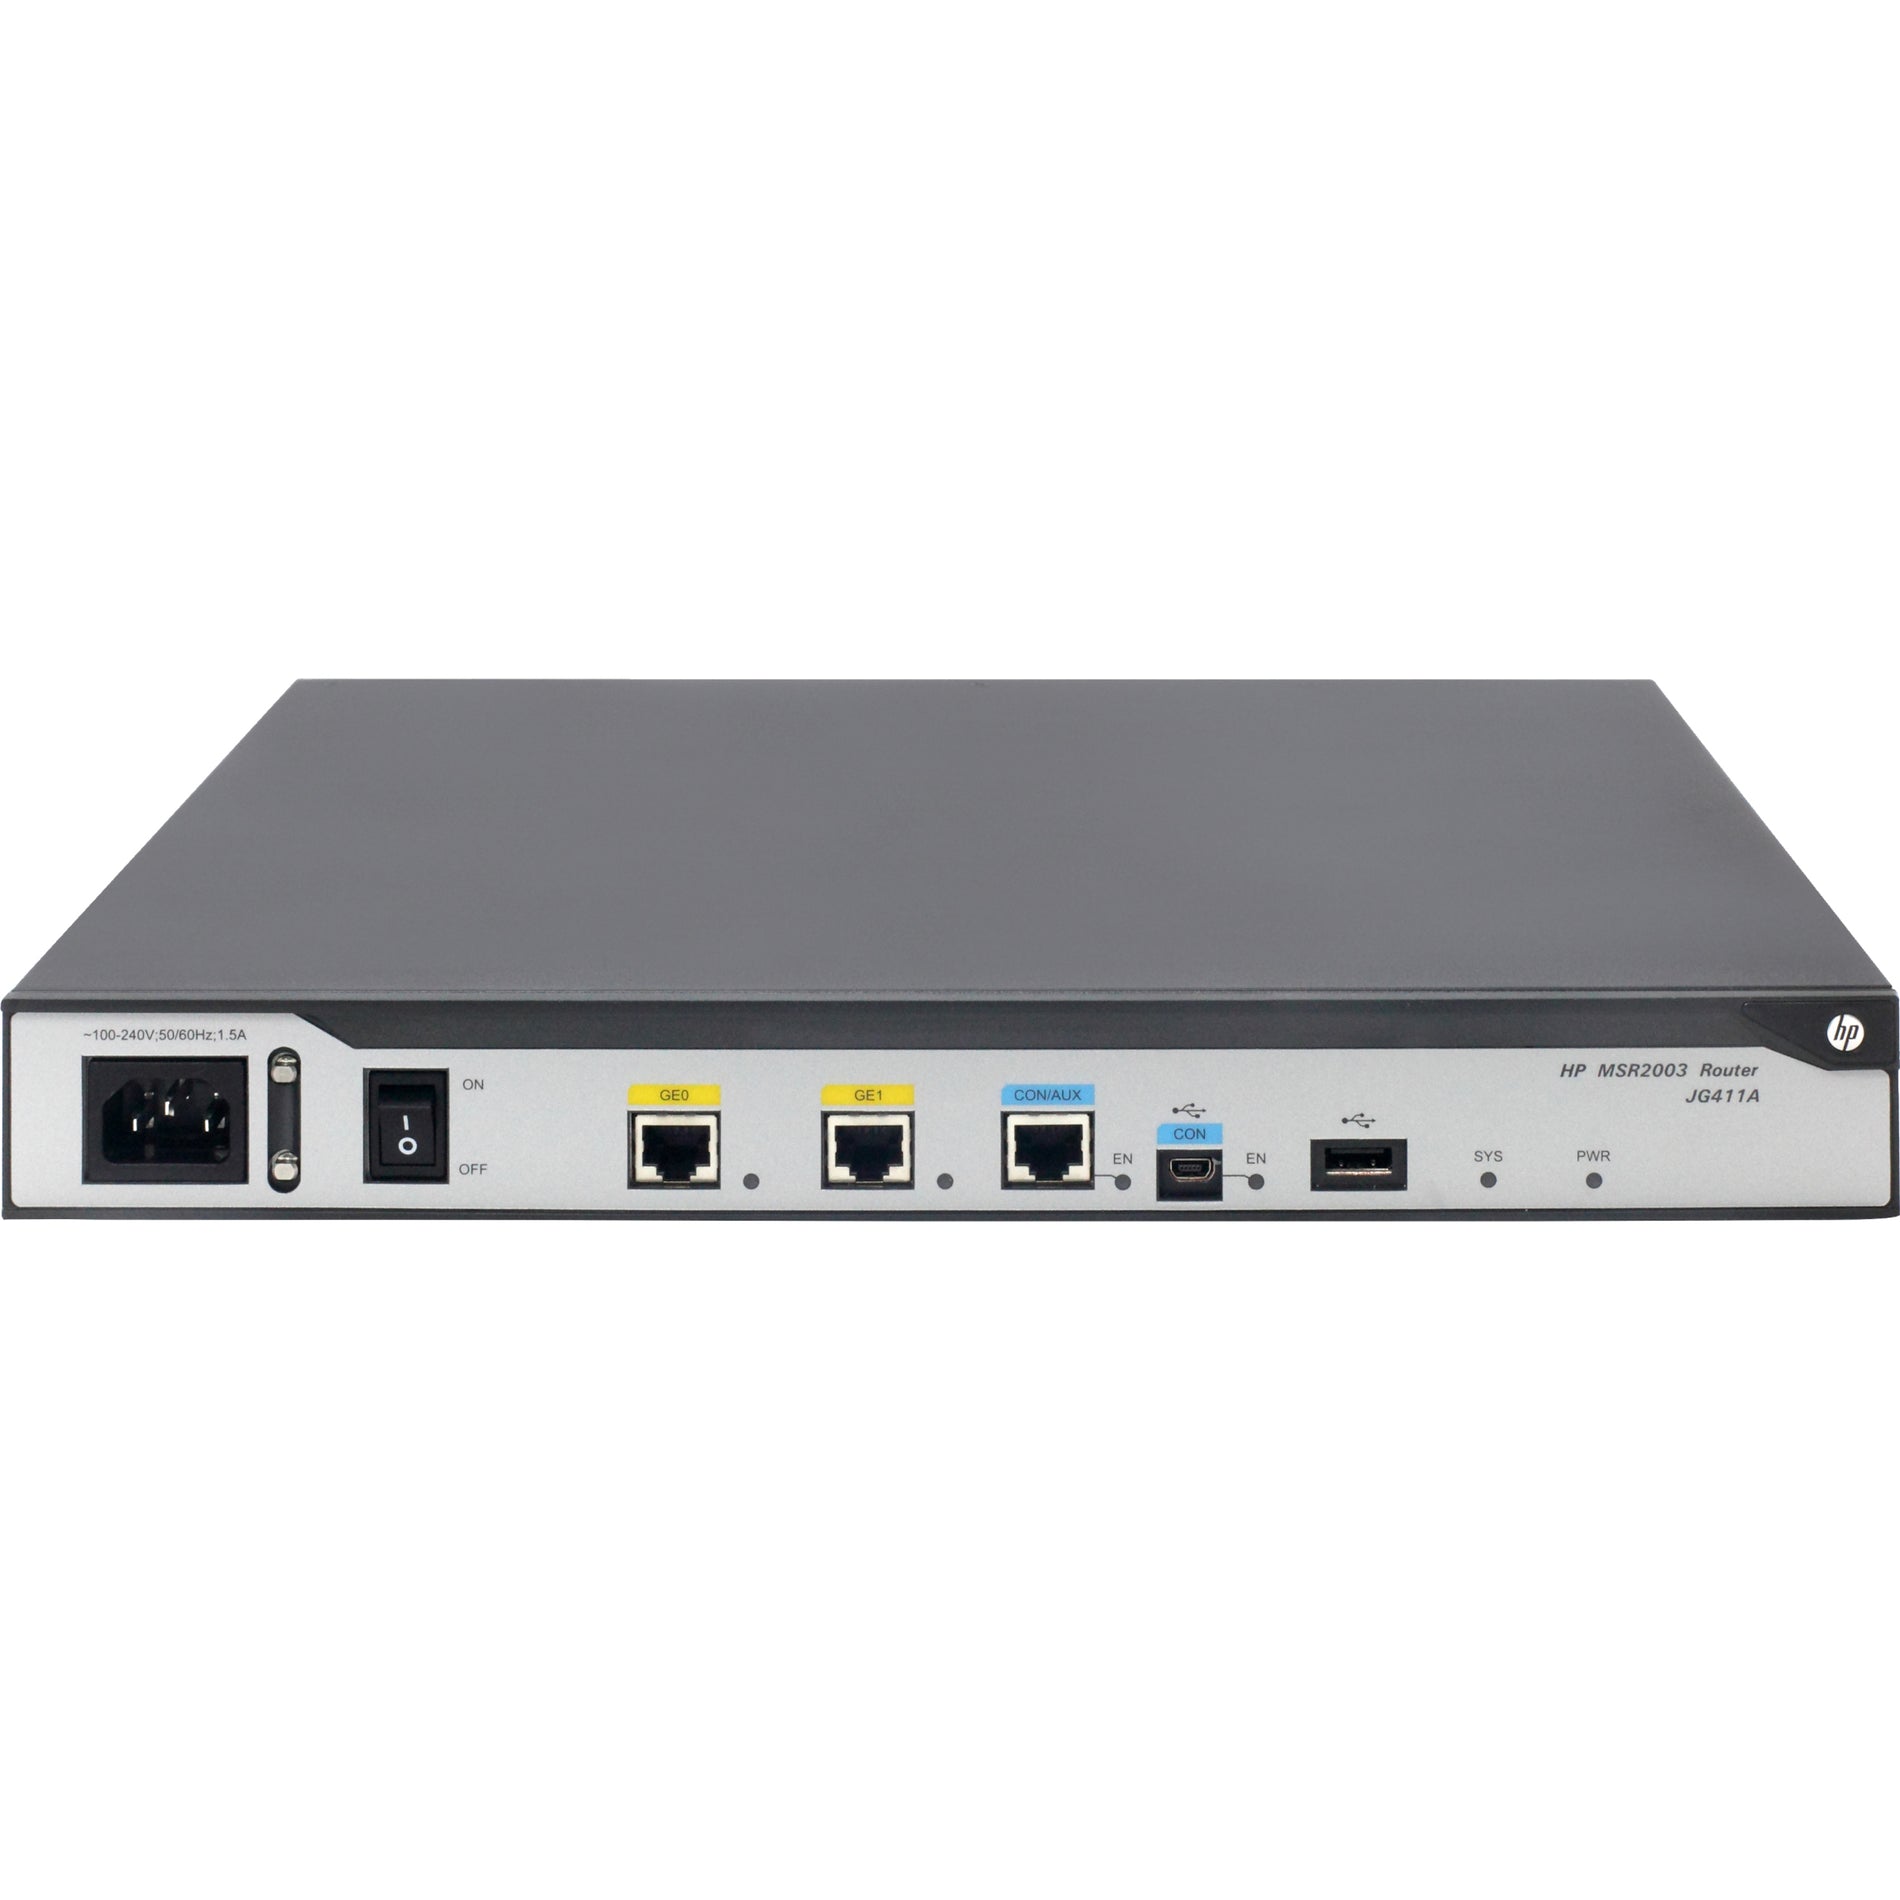 HPE MSR2003 AC Router, 1GB RAM, 256MB Flash Memory, Gigabit Ethernet